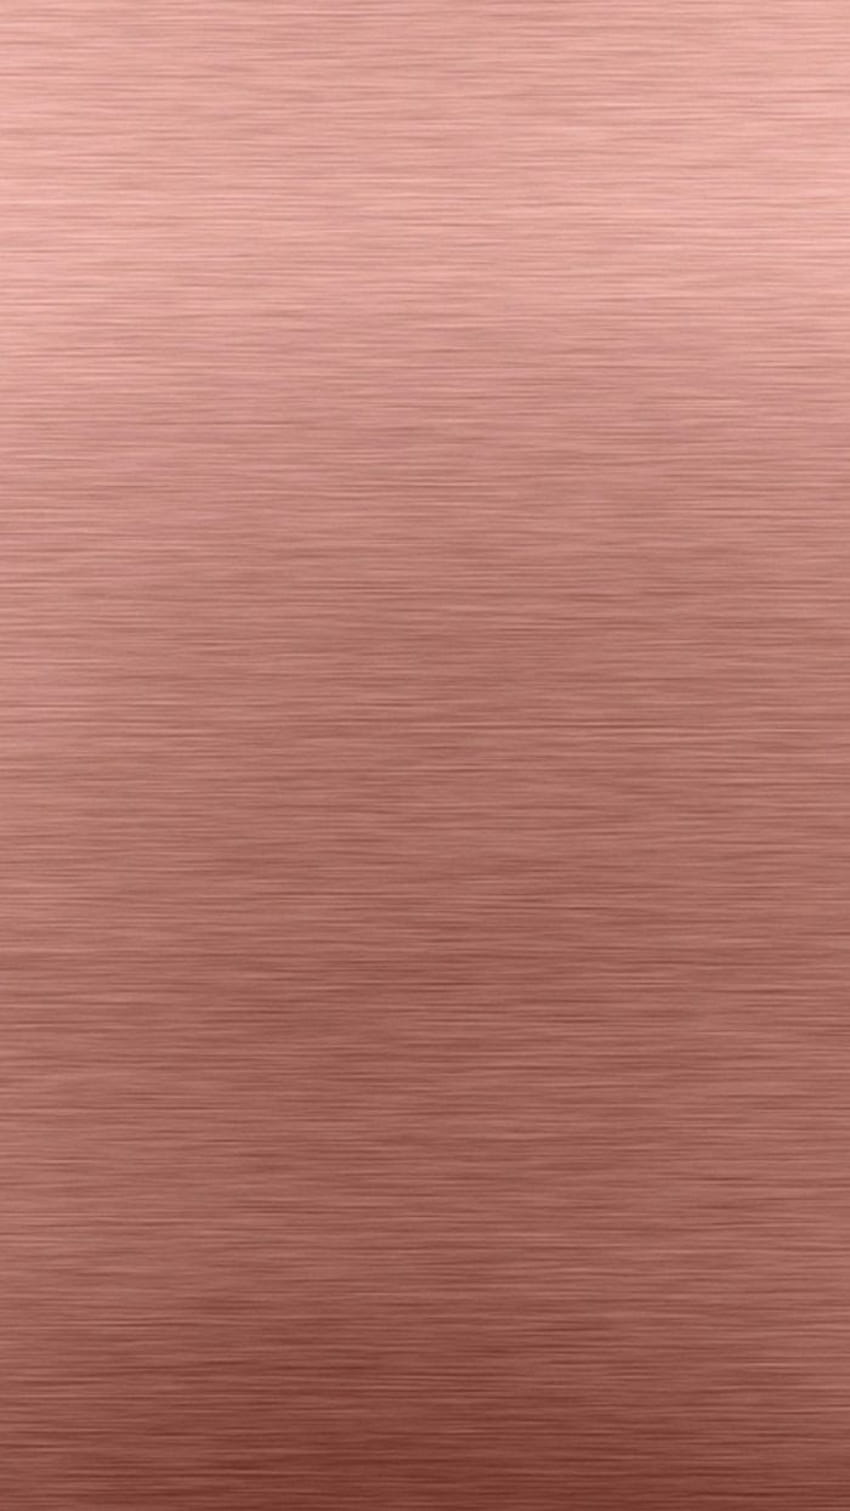 Android Rose Gold Haute Résolution 1080X1920. Planos de fundo, Fundos de cor sólida, Papel de parede cor de rosa, Rose Gold Metallic Fond d'écran de téléphone HD